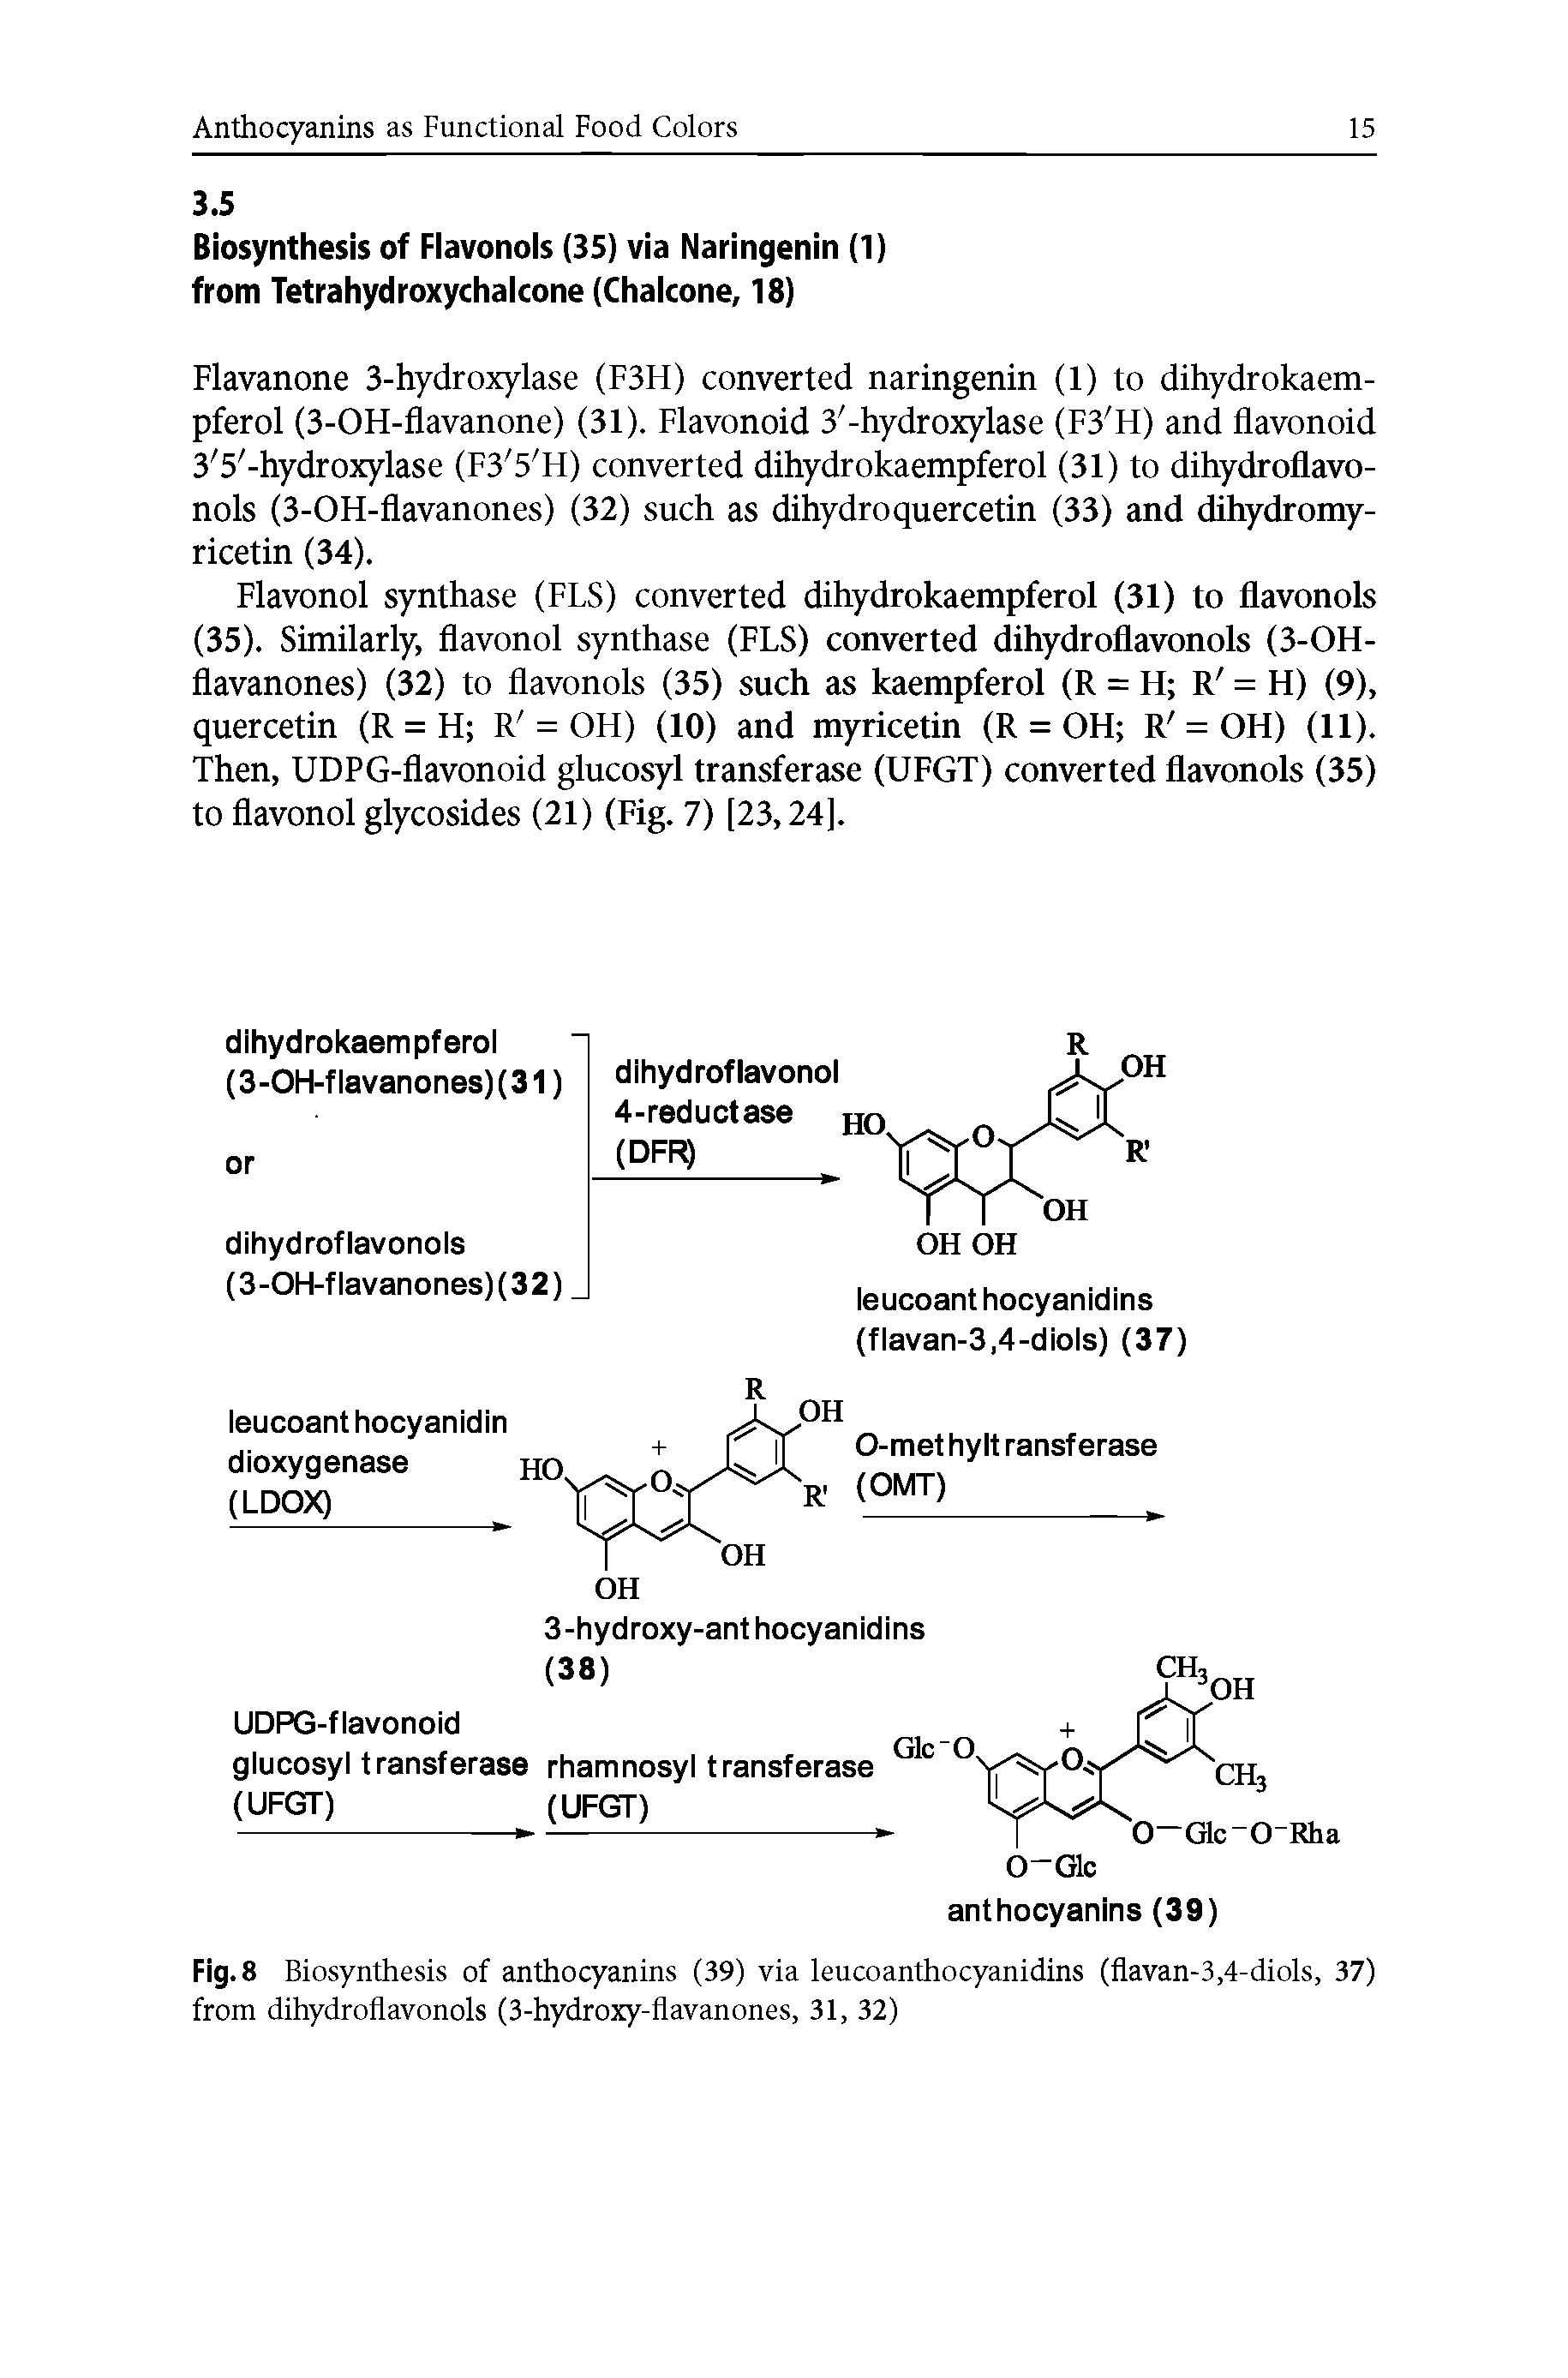 Fig. 8 Biosynthesis of anthocyanins (39) via leucoanthocyanidins (flavan-3,4-diols, 37) from dihydroflavonols (3-hydroxy-flavanones, 31, 32)...